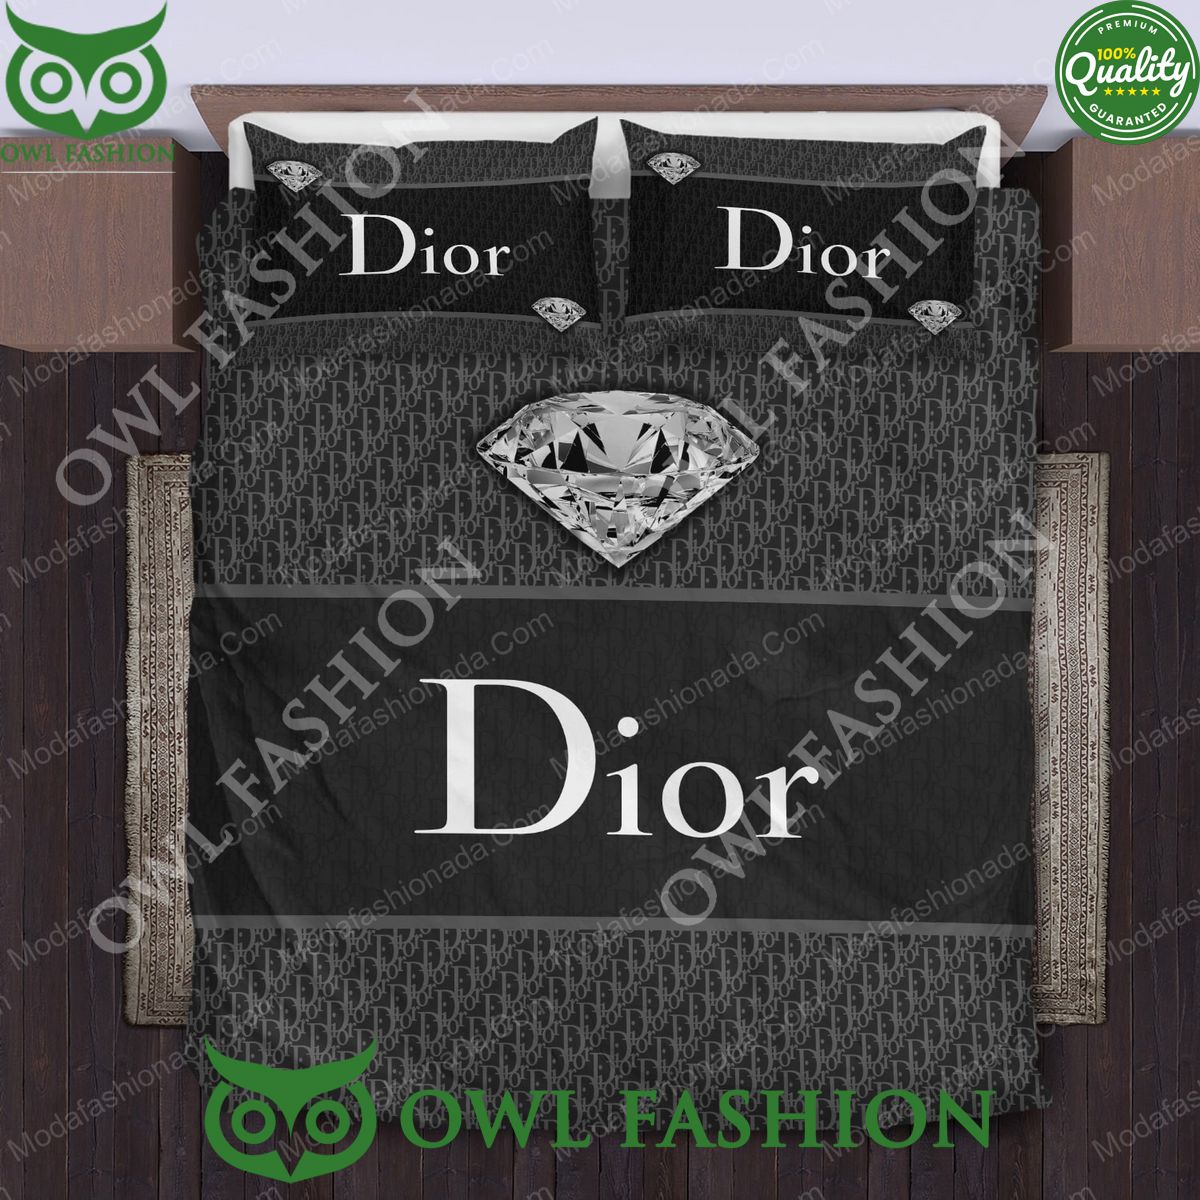 dior diamond logo pattern limited bedding sets 1 loAcK.jpg